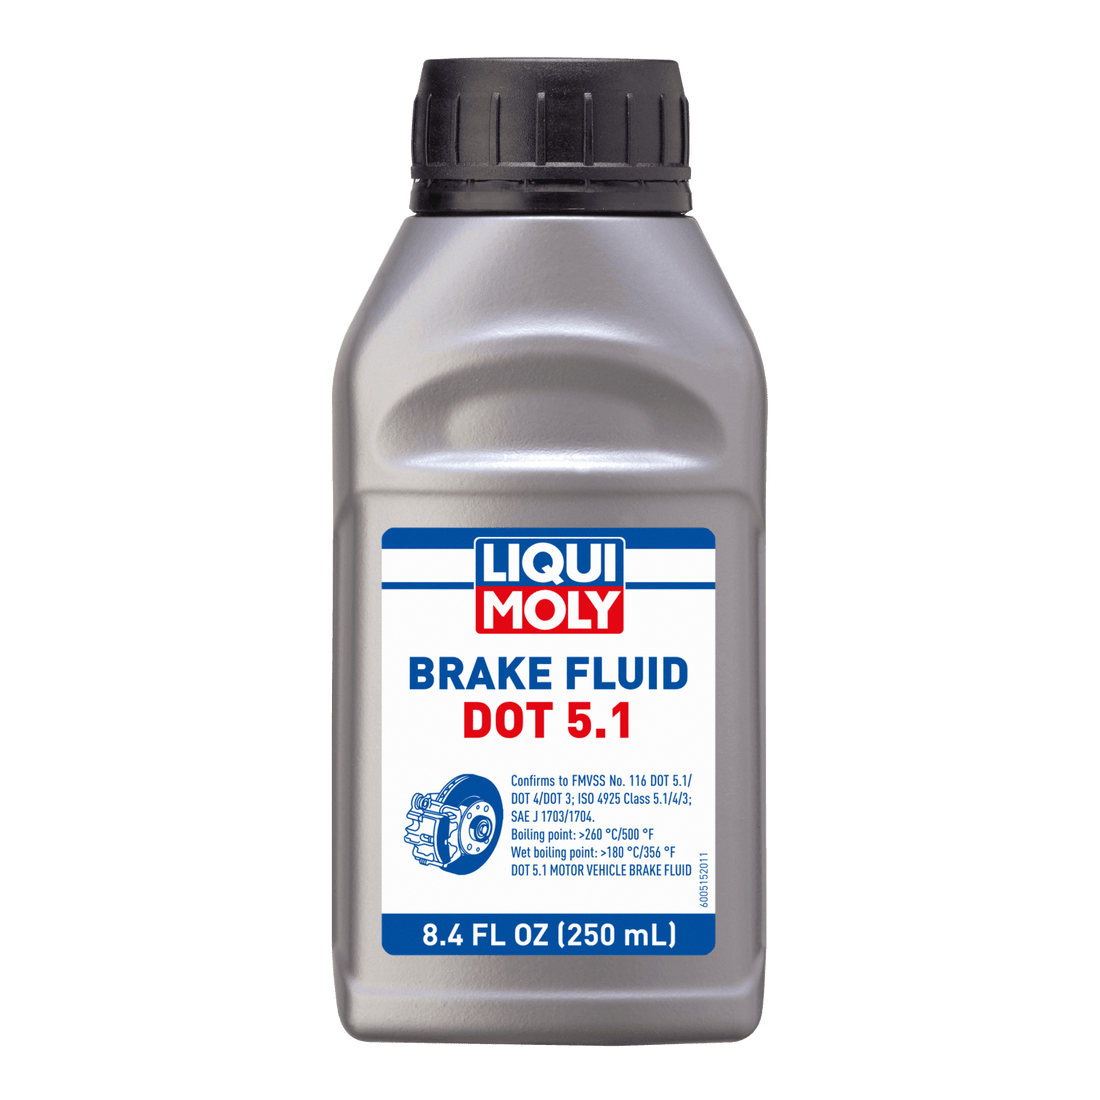 LIQUI MOLY 250mL Brake Fluid DOT 5.1 - Saikospeed